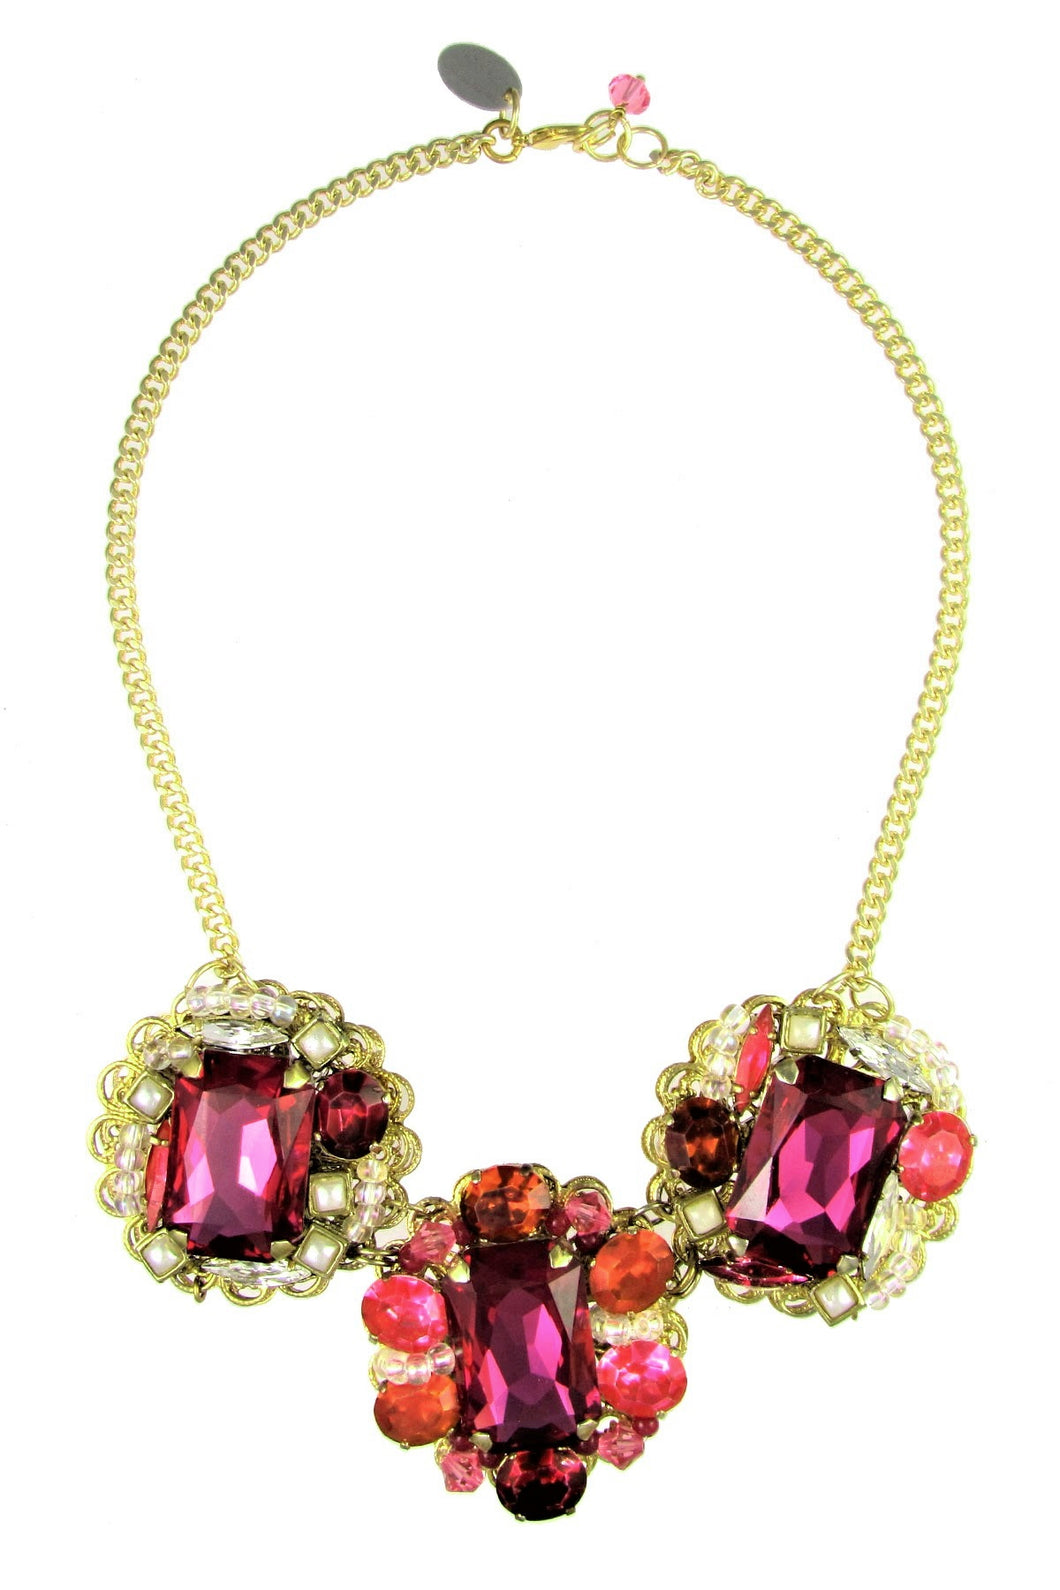 Fuchsia Swarovski crystals and Pearls Necklace